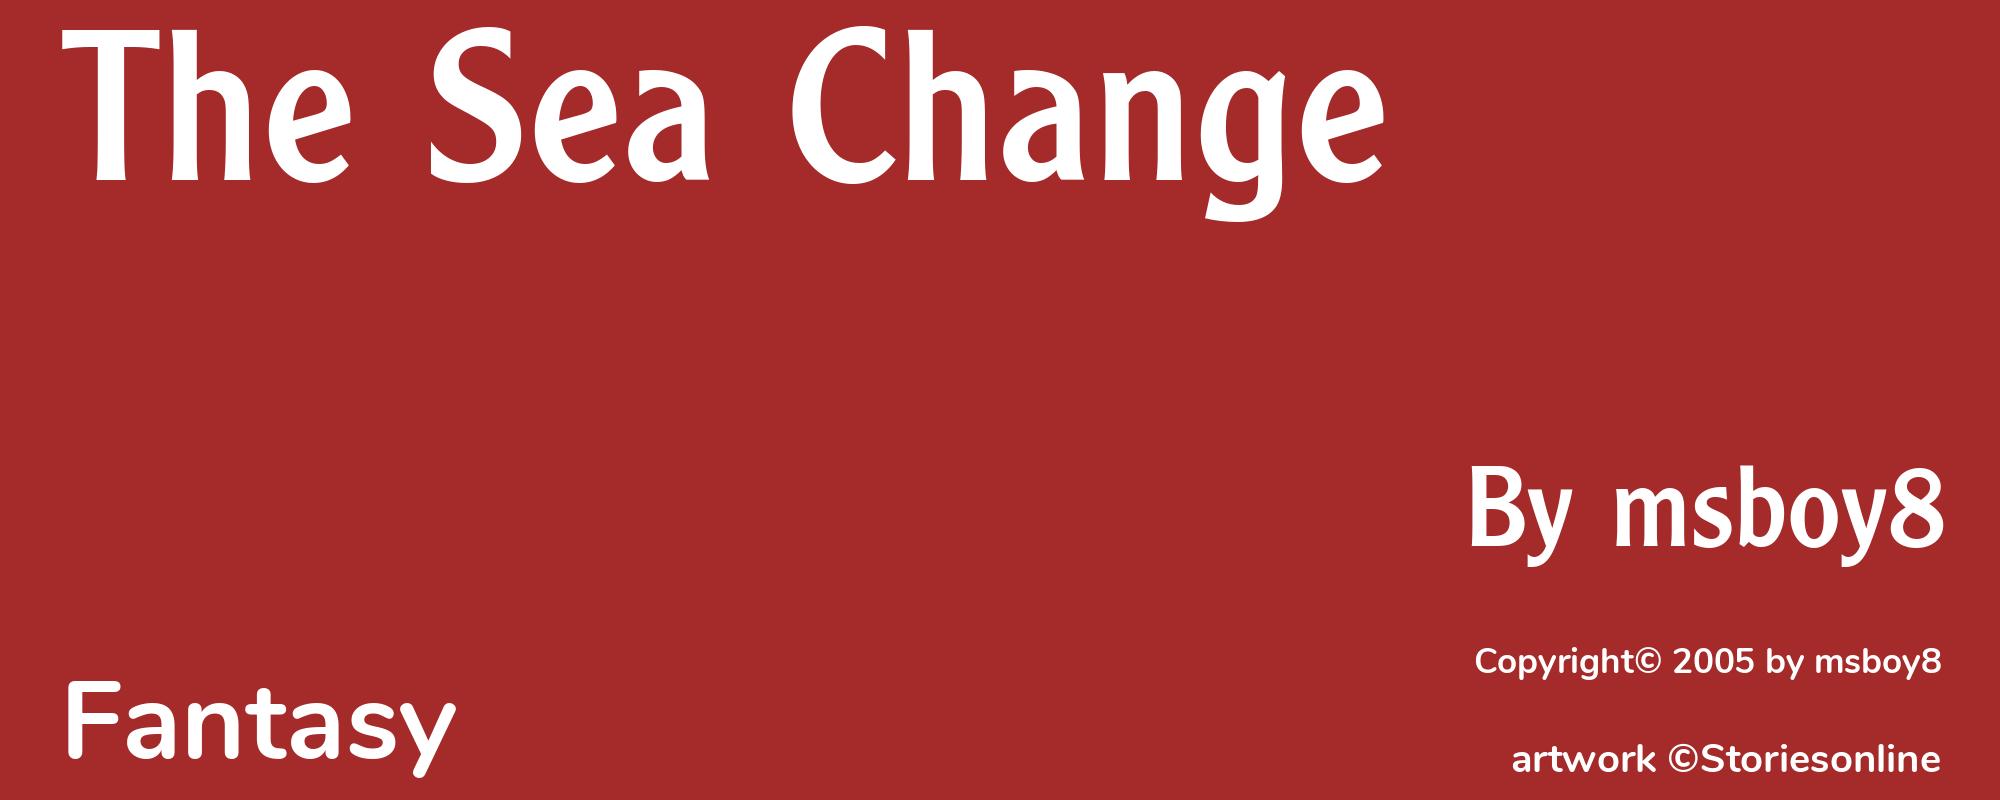 The Sea Change - Cover